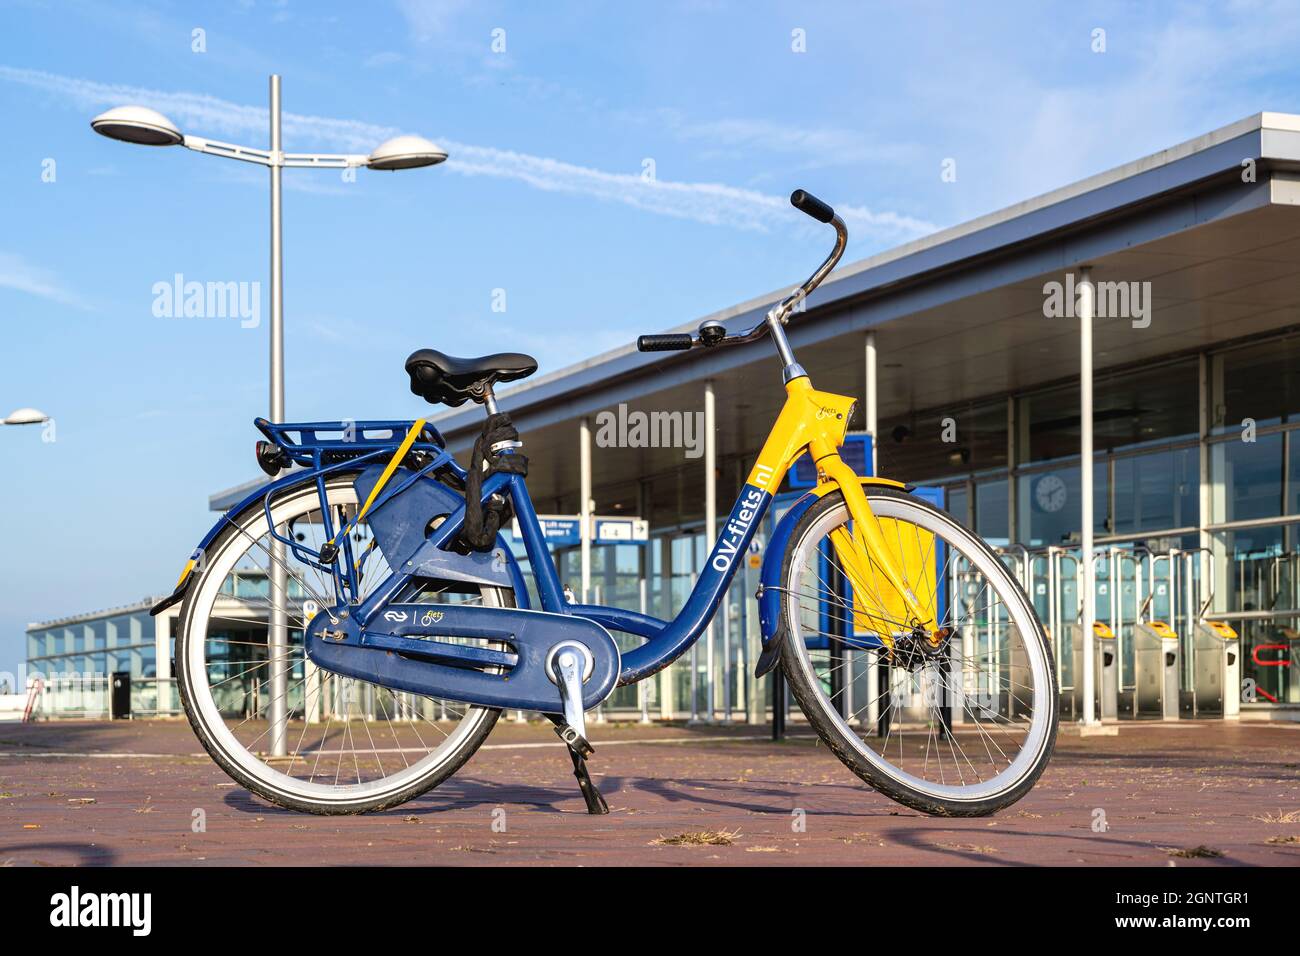 OV-fiets bike at Barendrecht station Stock Photo